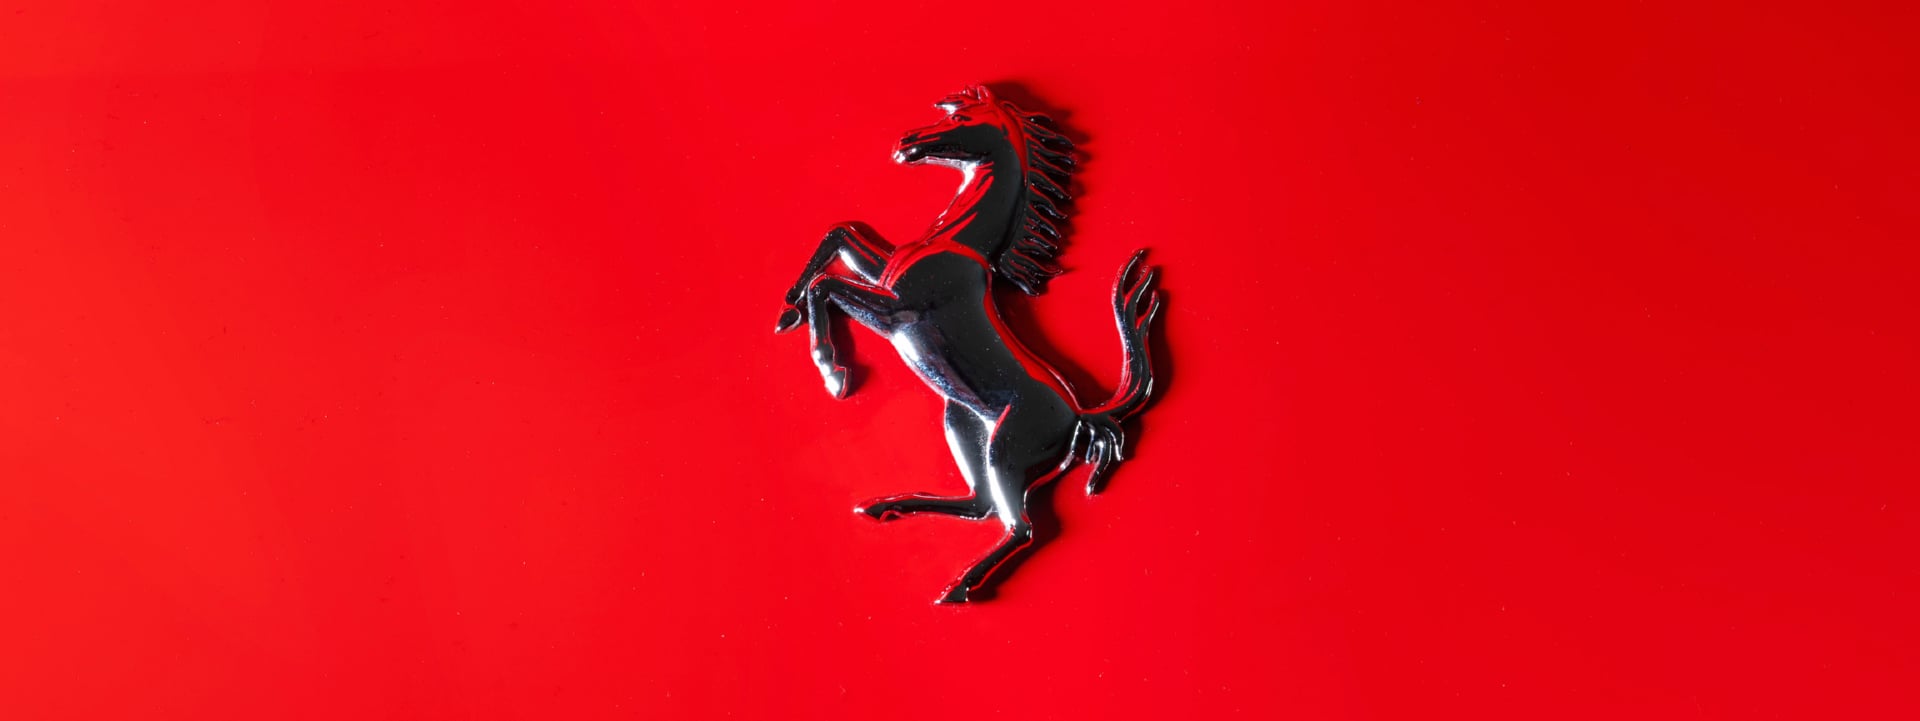 Ferrari logo at 1280 x 960 size wallpapers HD quality